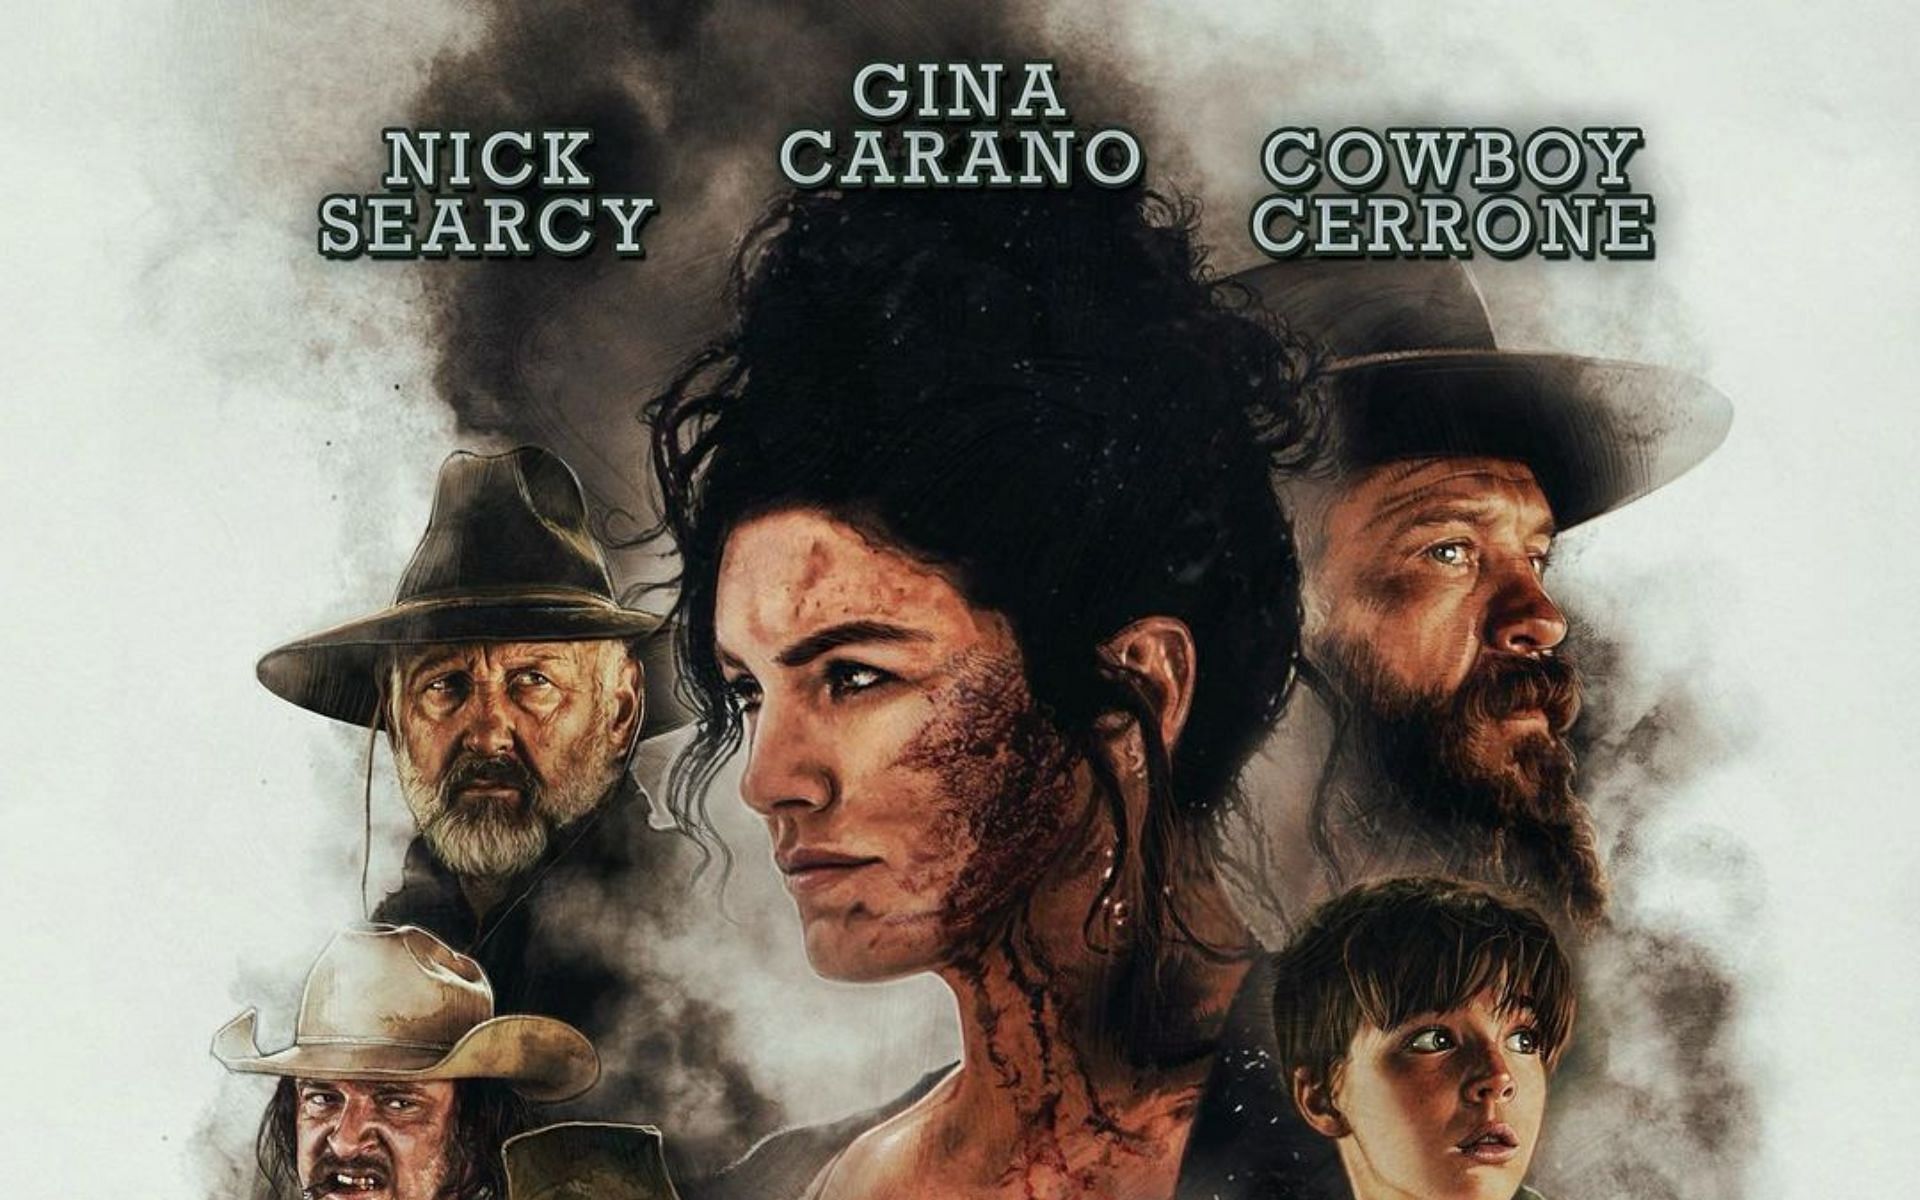 Gina Carano (center) and Donald Cerrone (top right) [Image courtesy @ginacarano on Instagram)